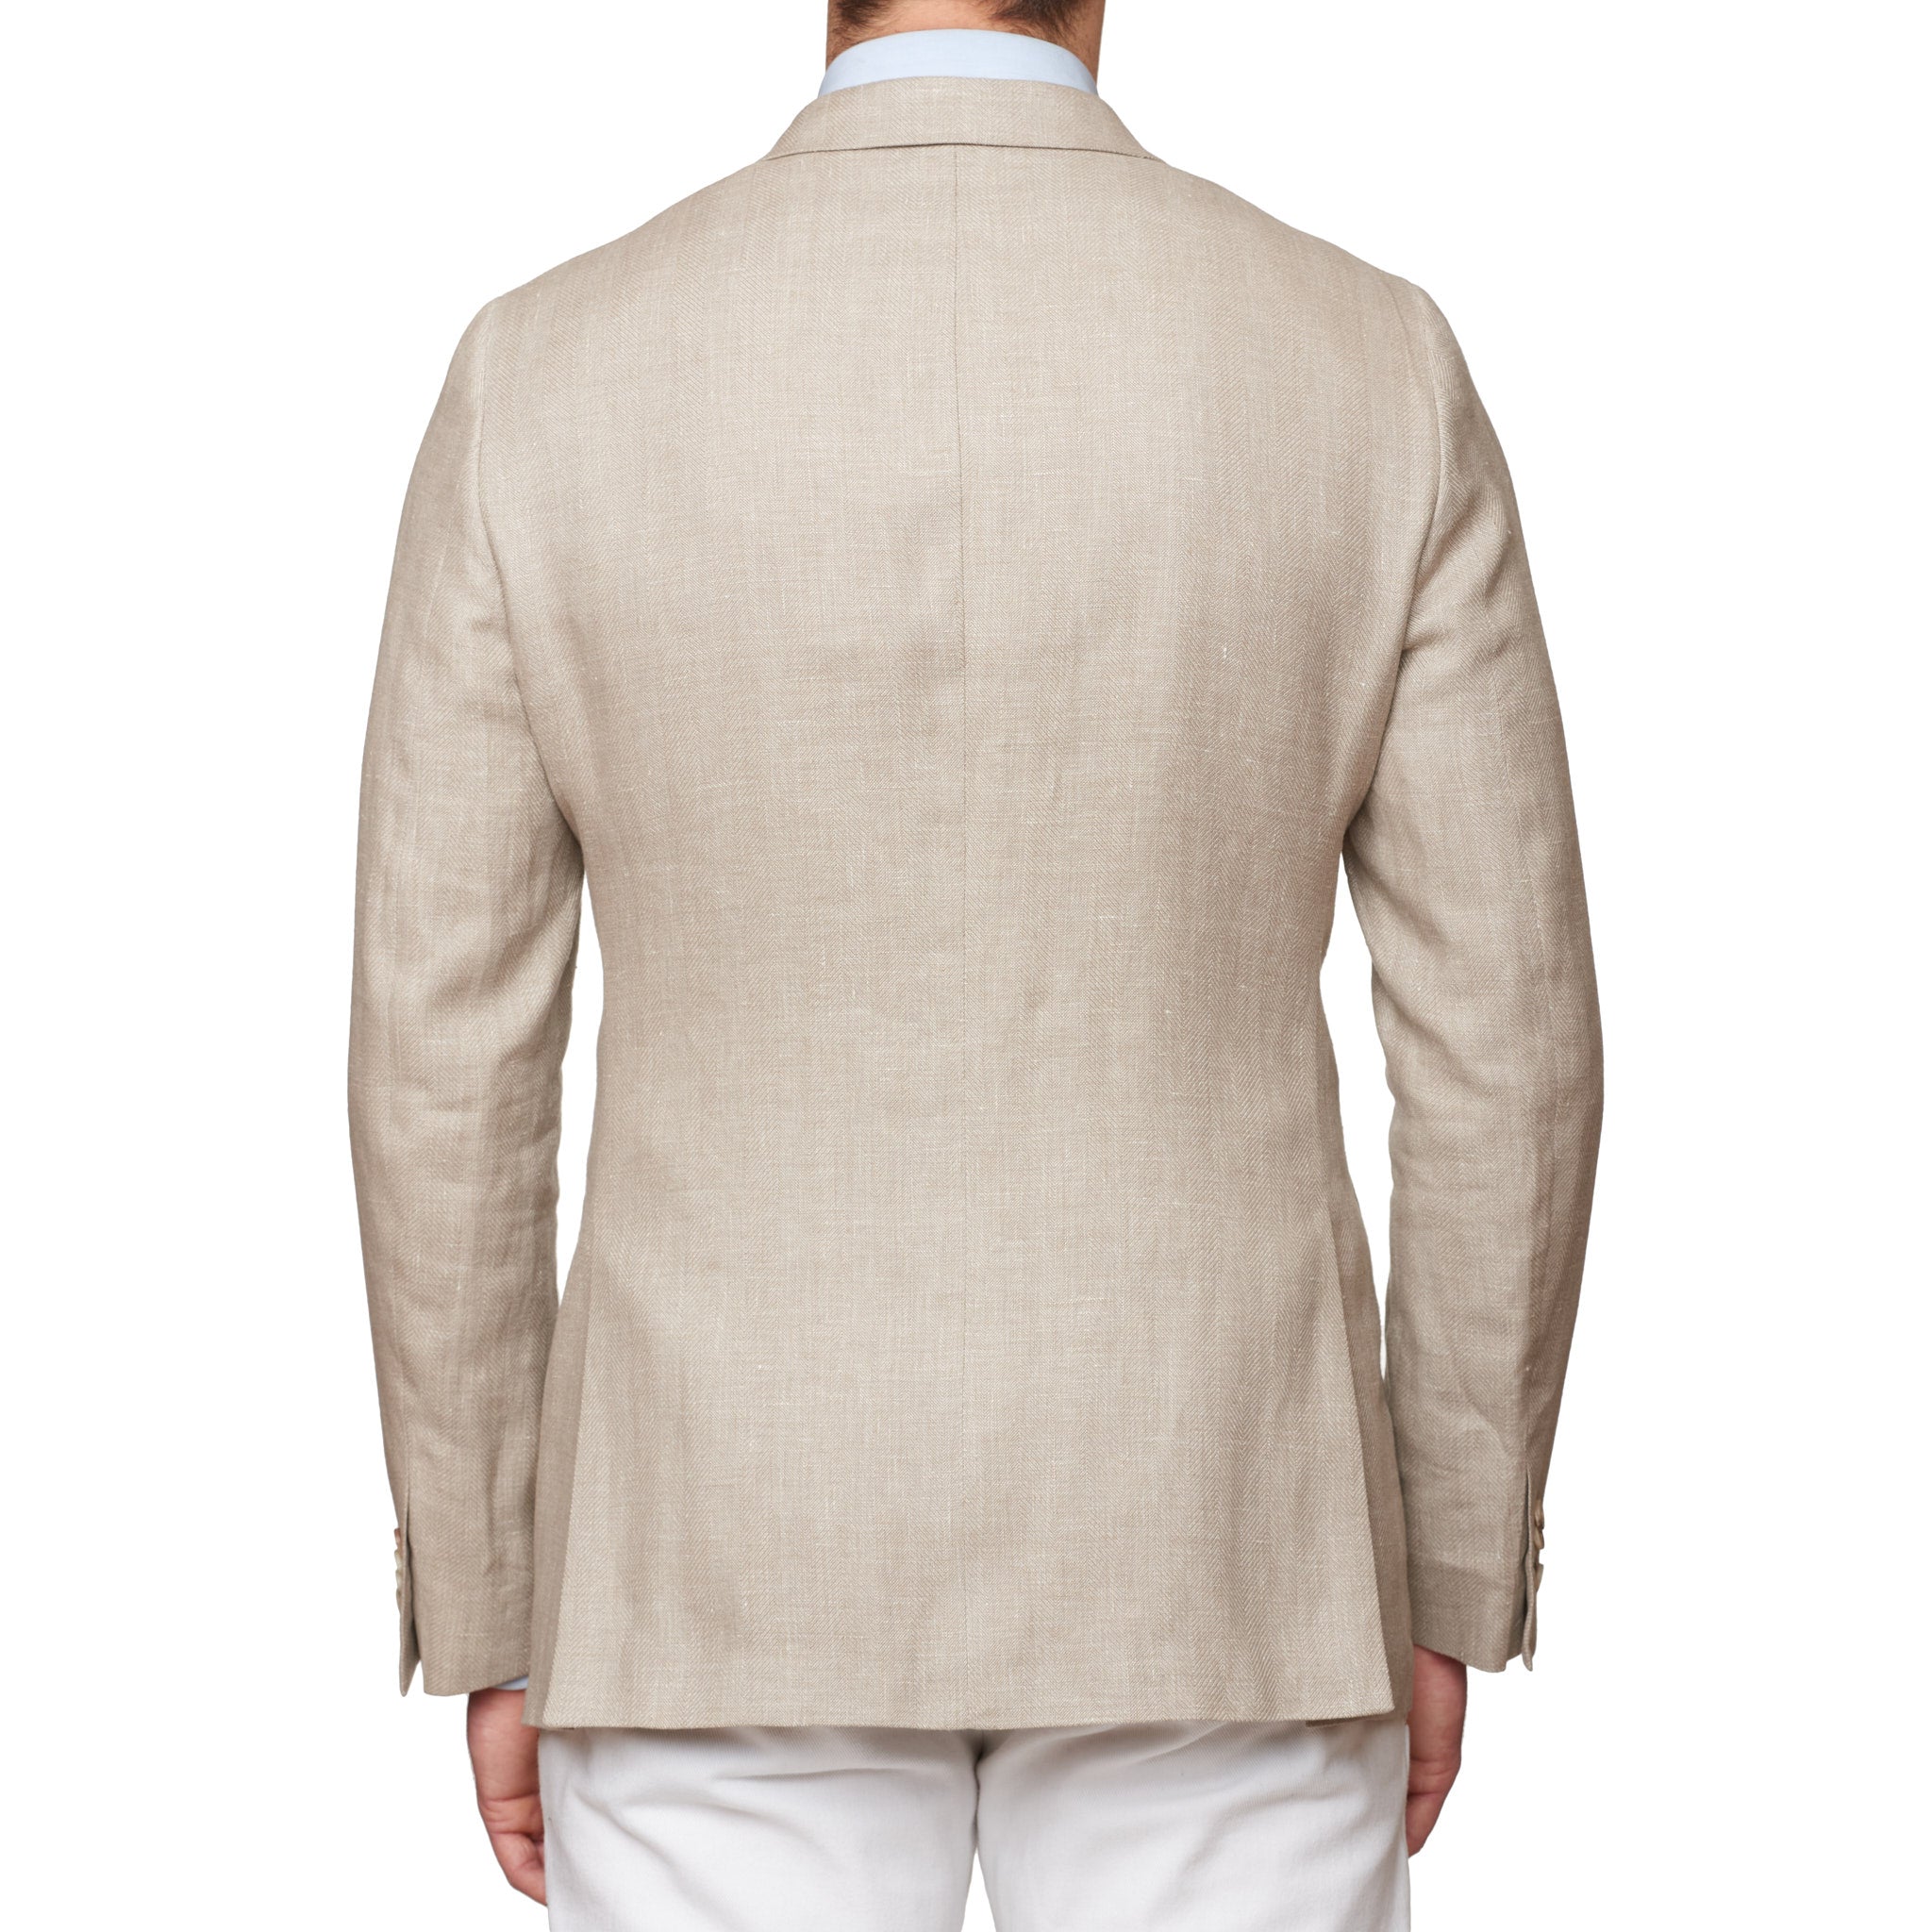 BOGLIOLI Milano "SFORZA" Sand Beige Herringbone Linen-Wool Jacket 54 NEW US 44 BOGLIOLI